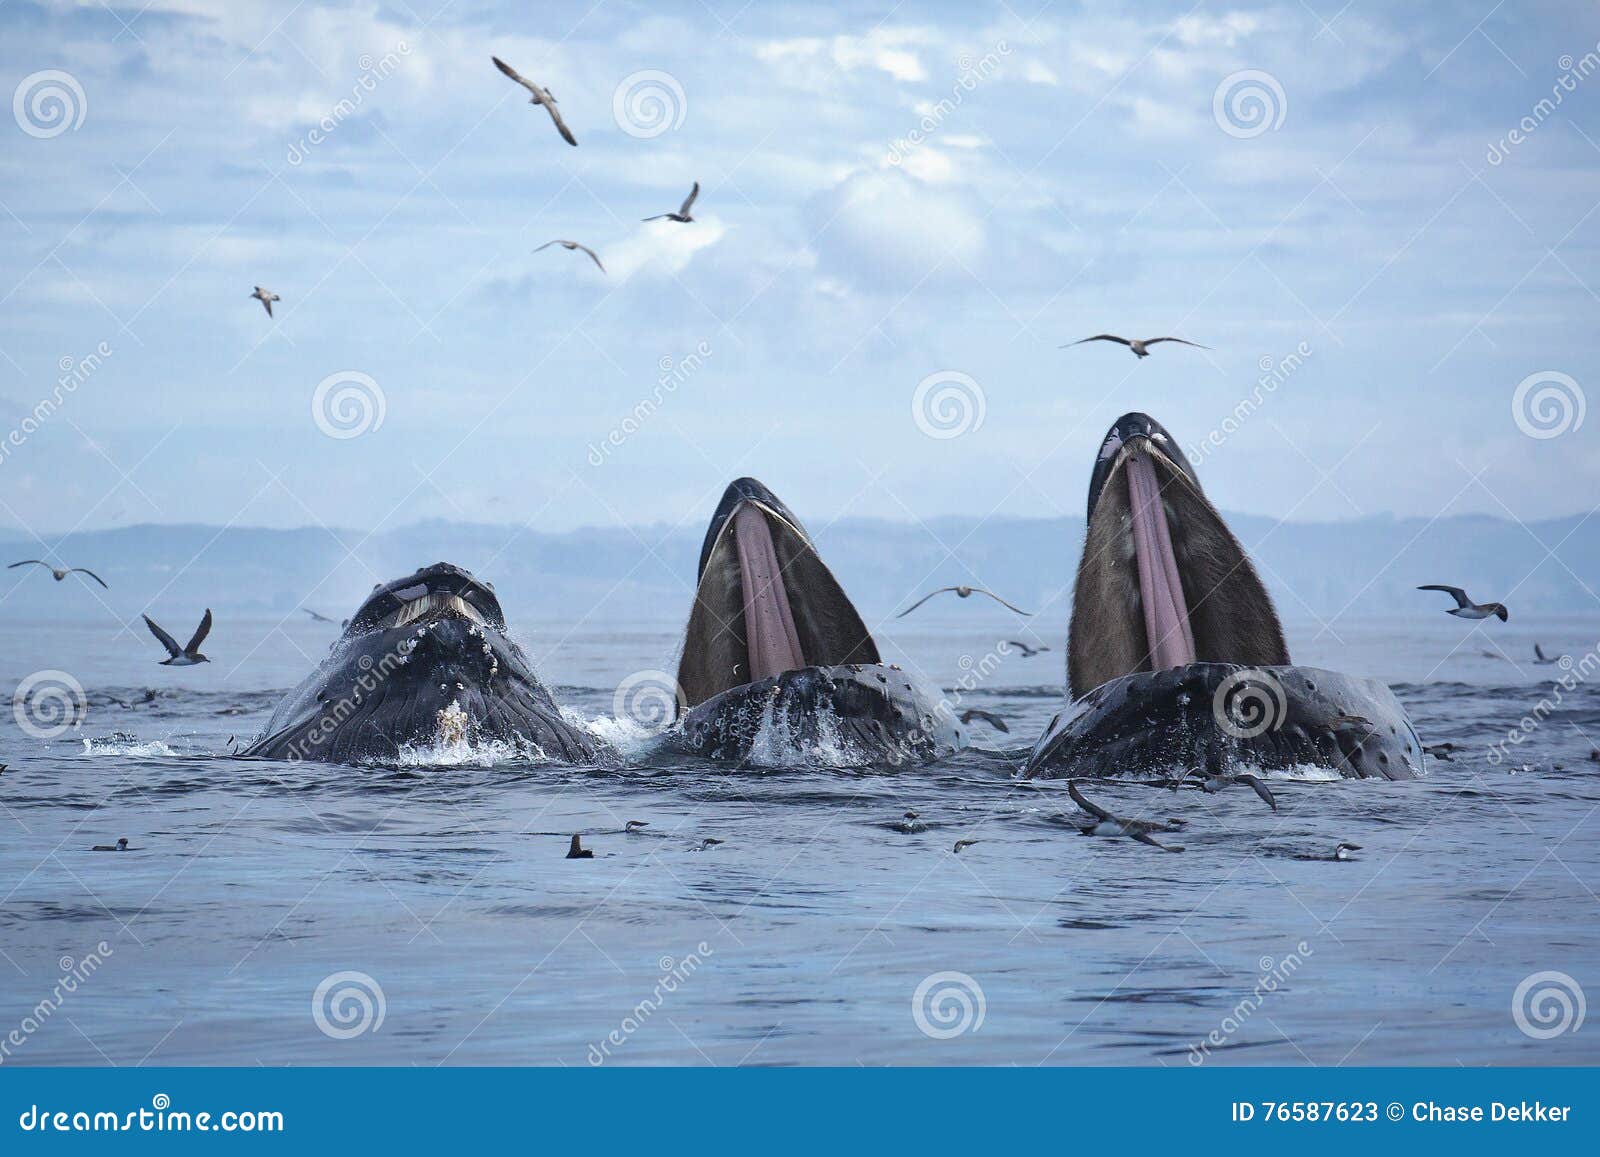 humpback whales lunge feeding